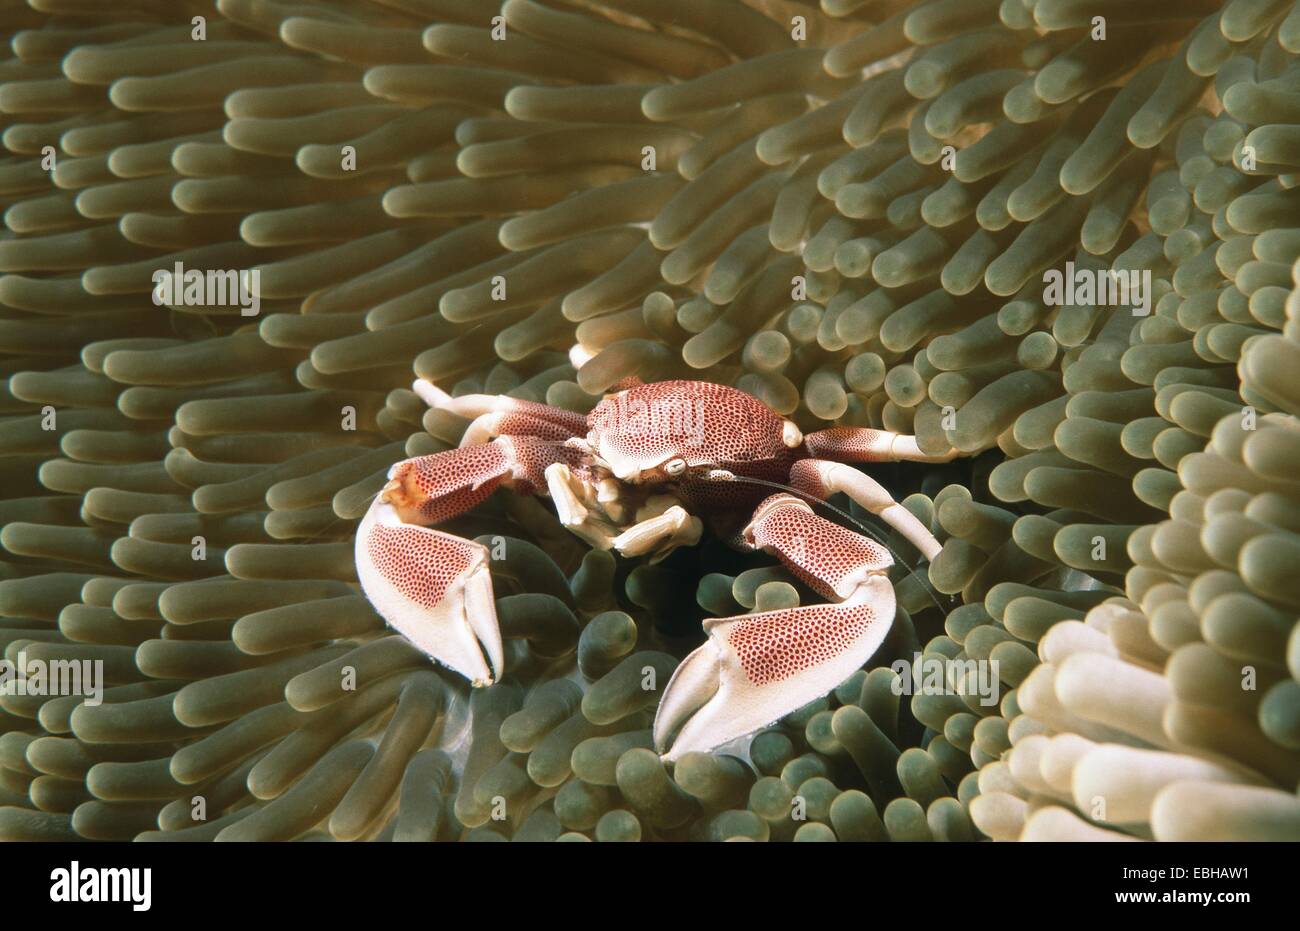 porcelain crab (Neopetrolistes maculatus in Stichodactyla mertensii). Stock Photo